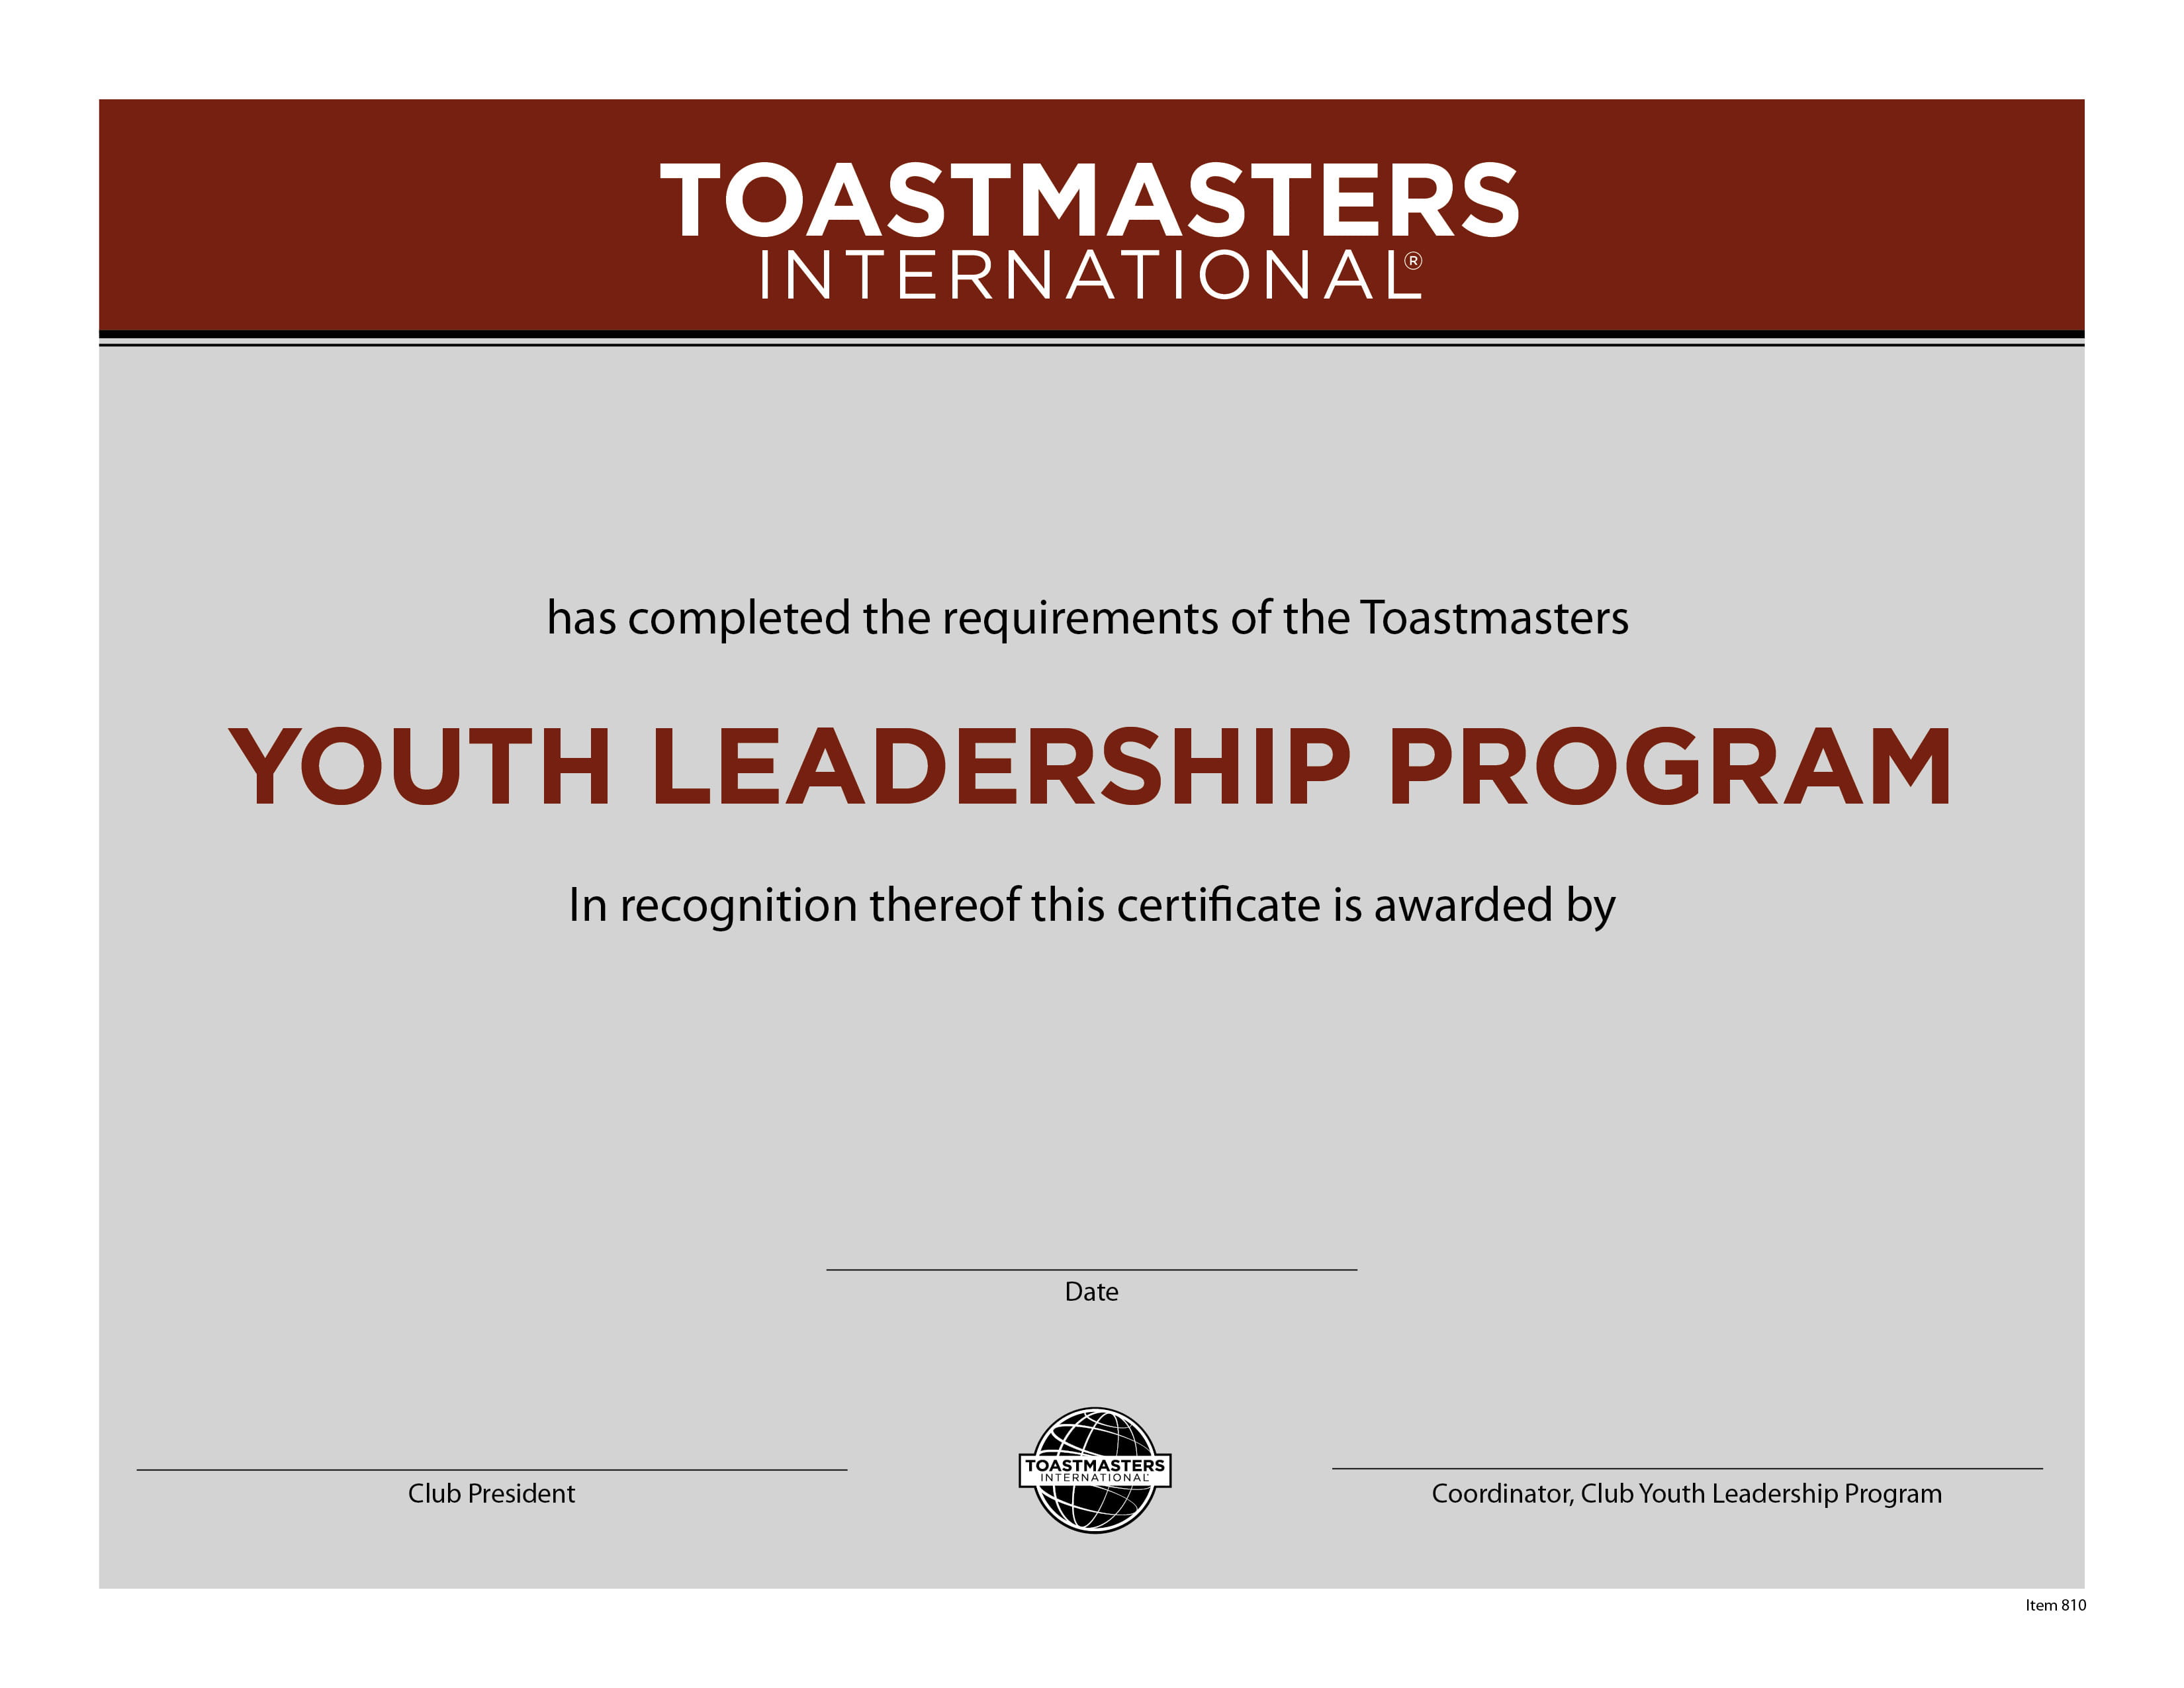 Youth Leadership Coordinator #39 s Certificate